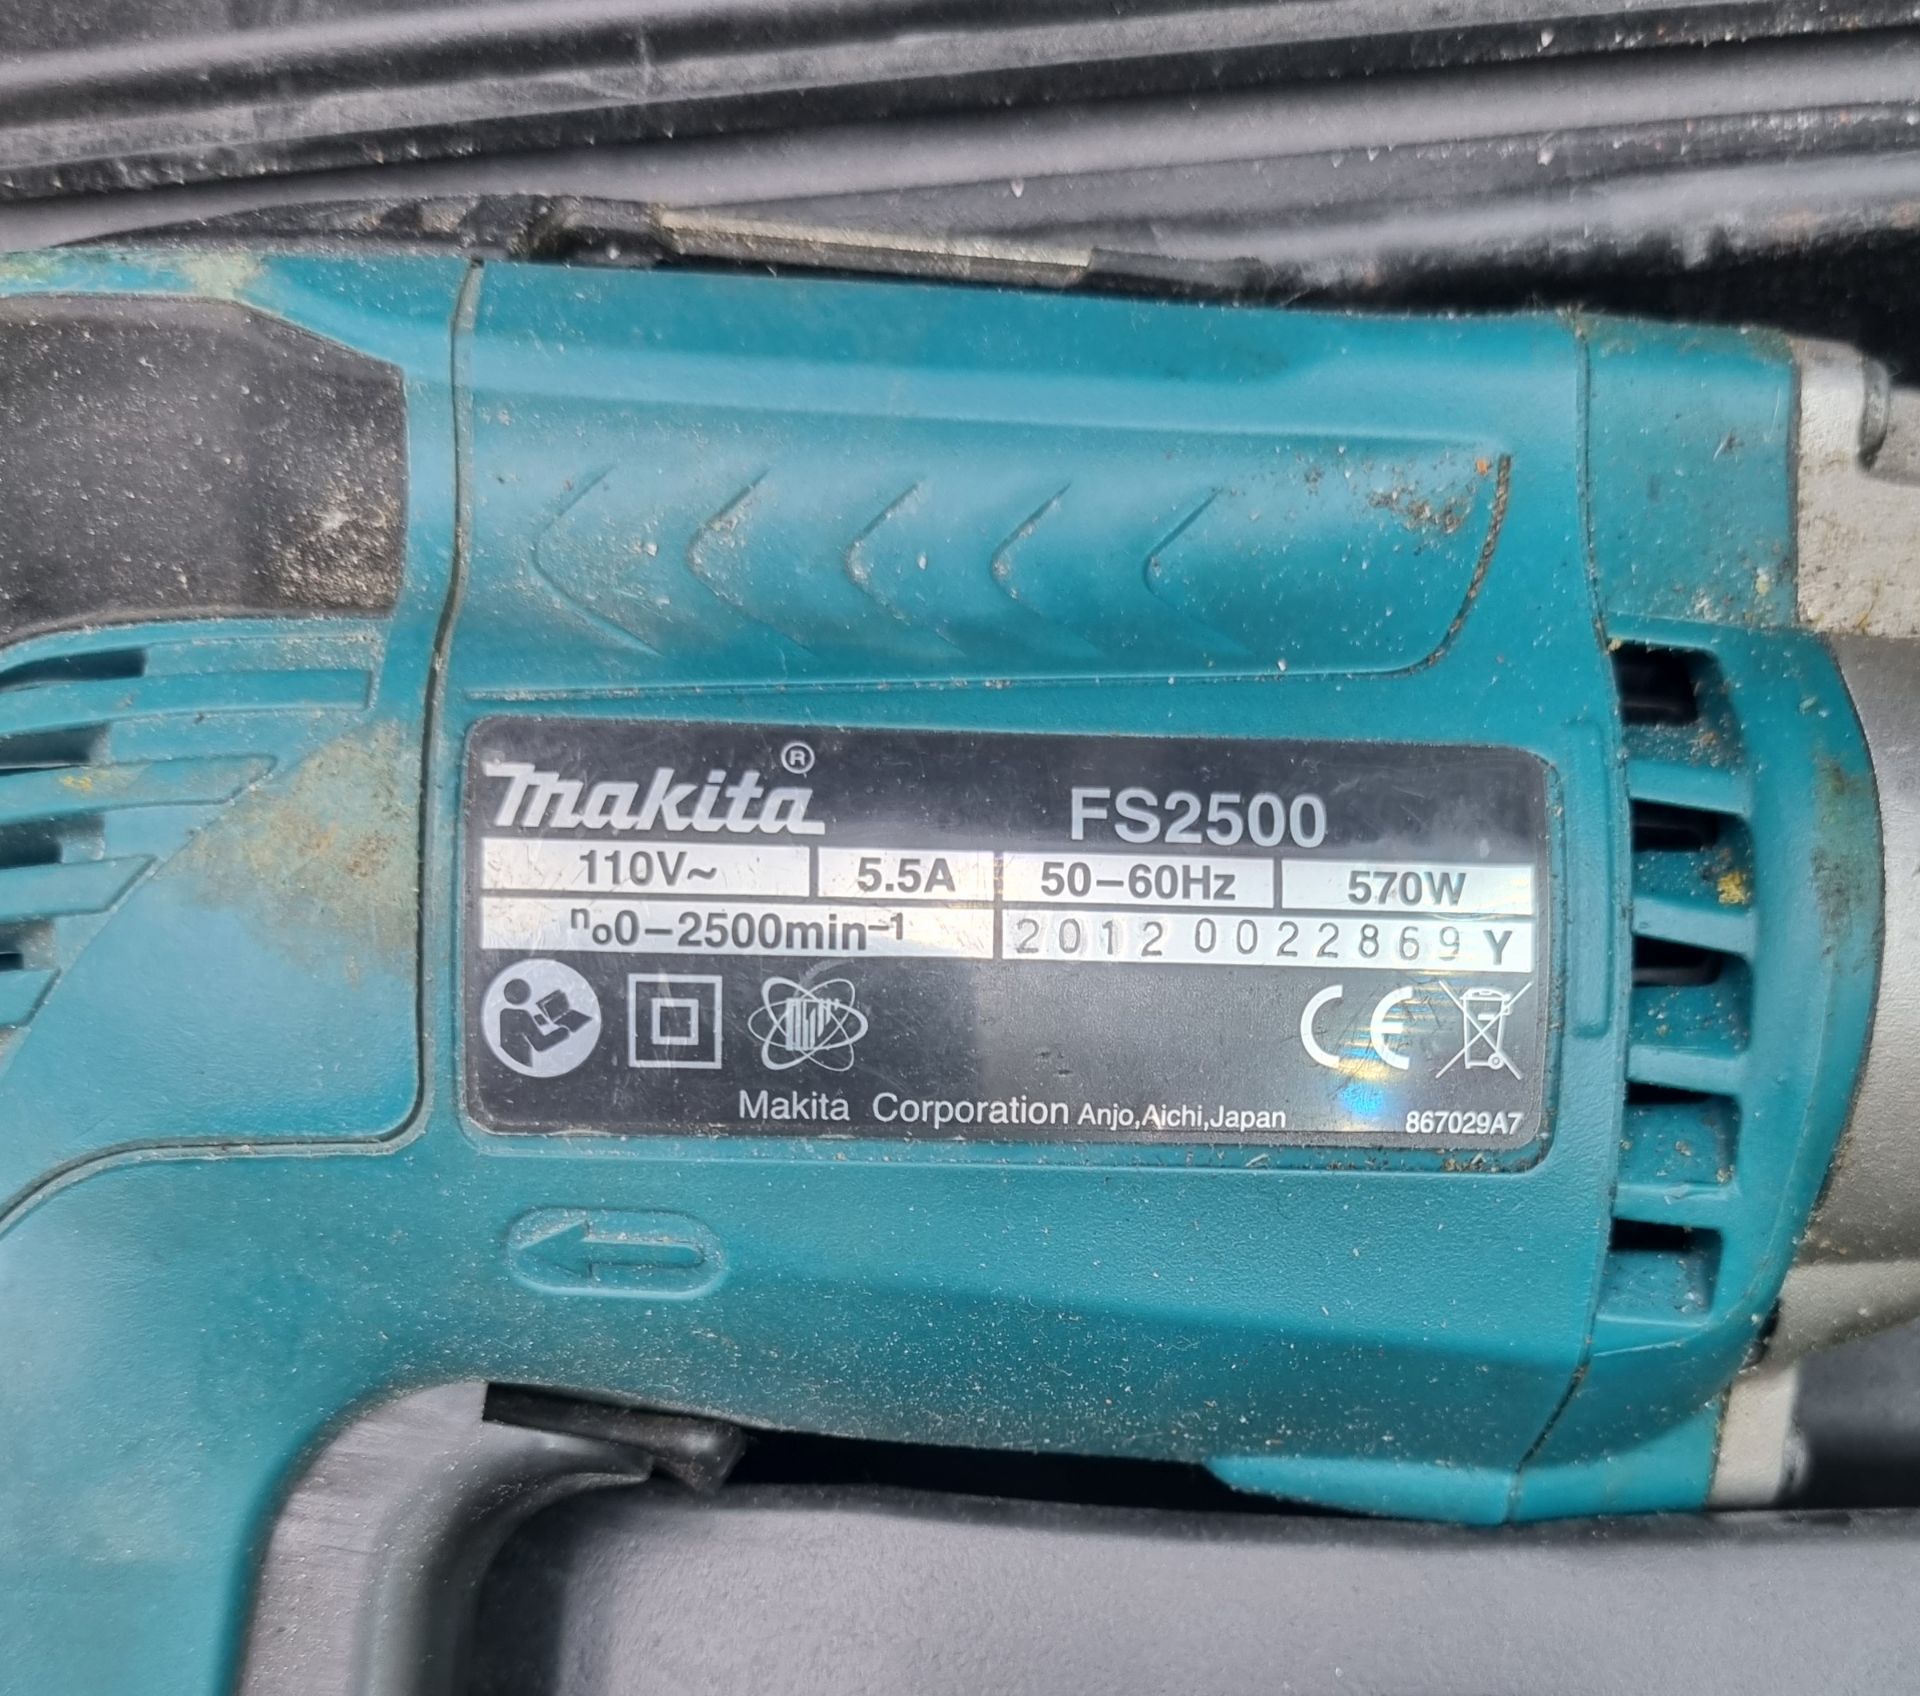 Makita FS2500 power drill - Image 3 of 4